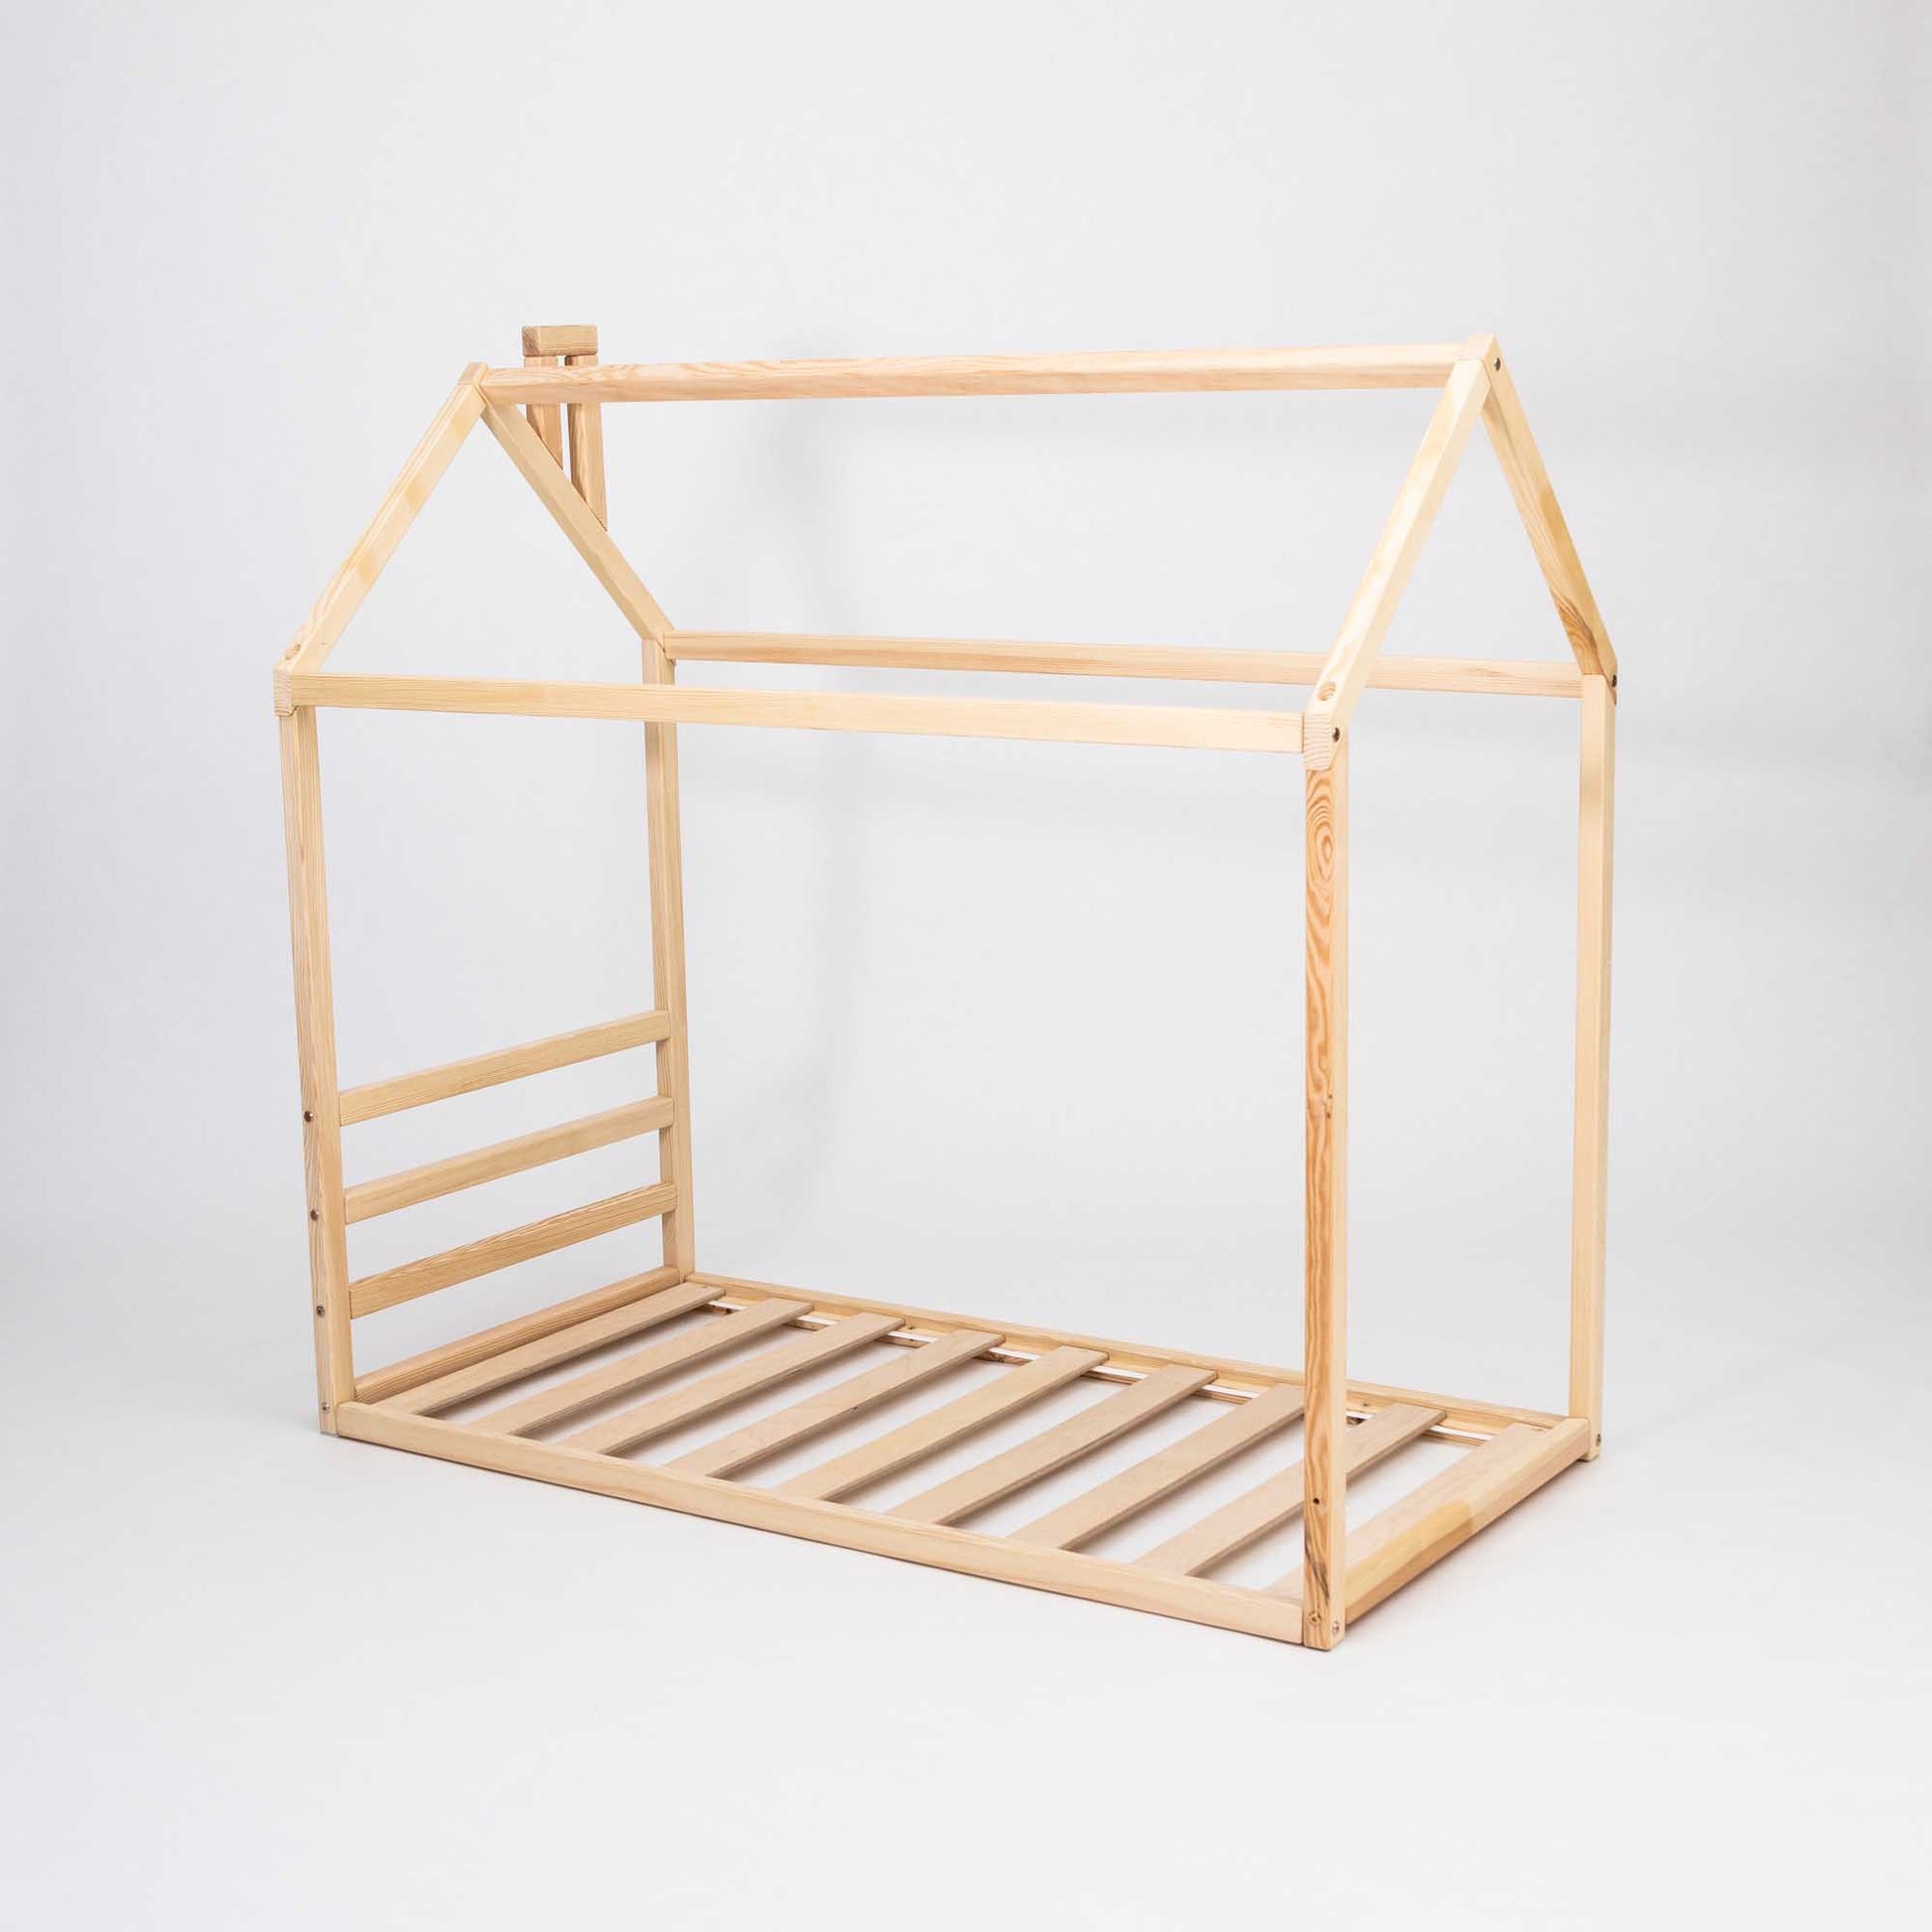 Cama infantil con forma de casa y cabecero horizontal – Sweet HOME from wood